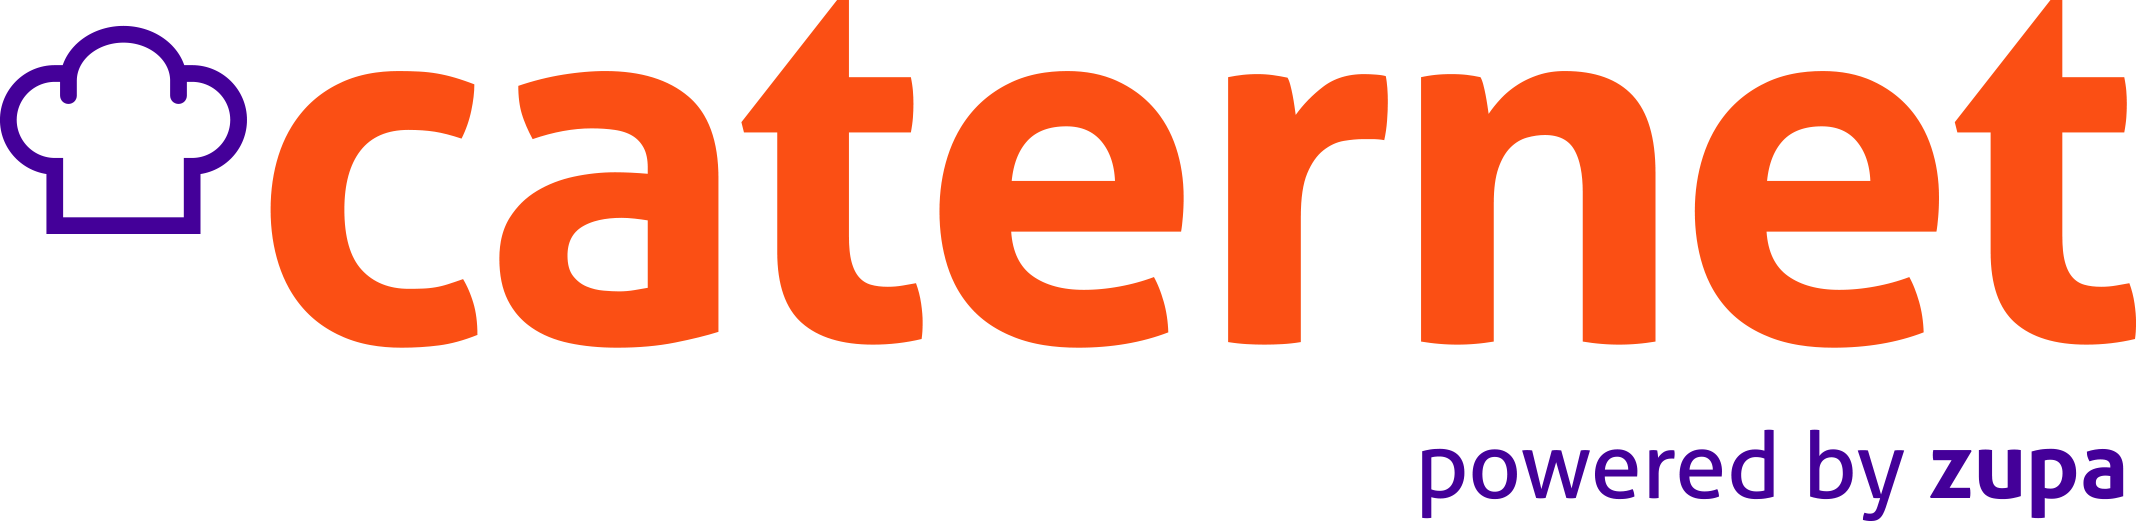 Caternet logo